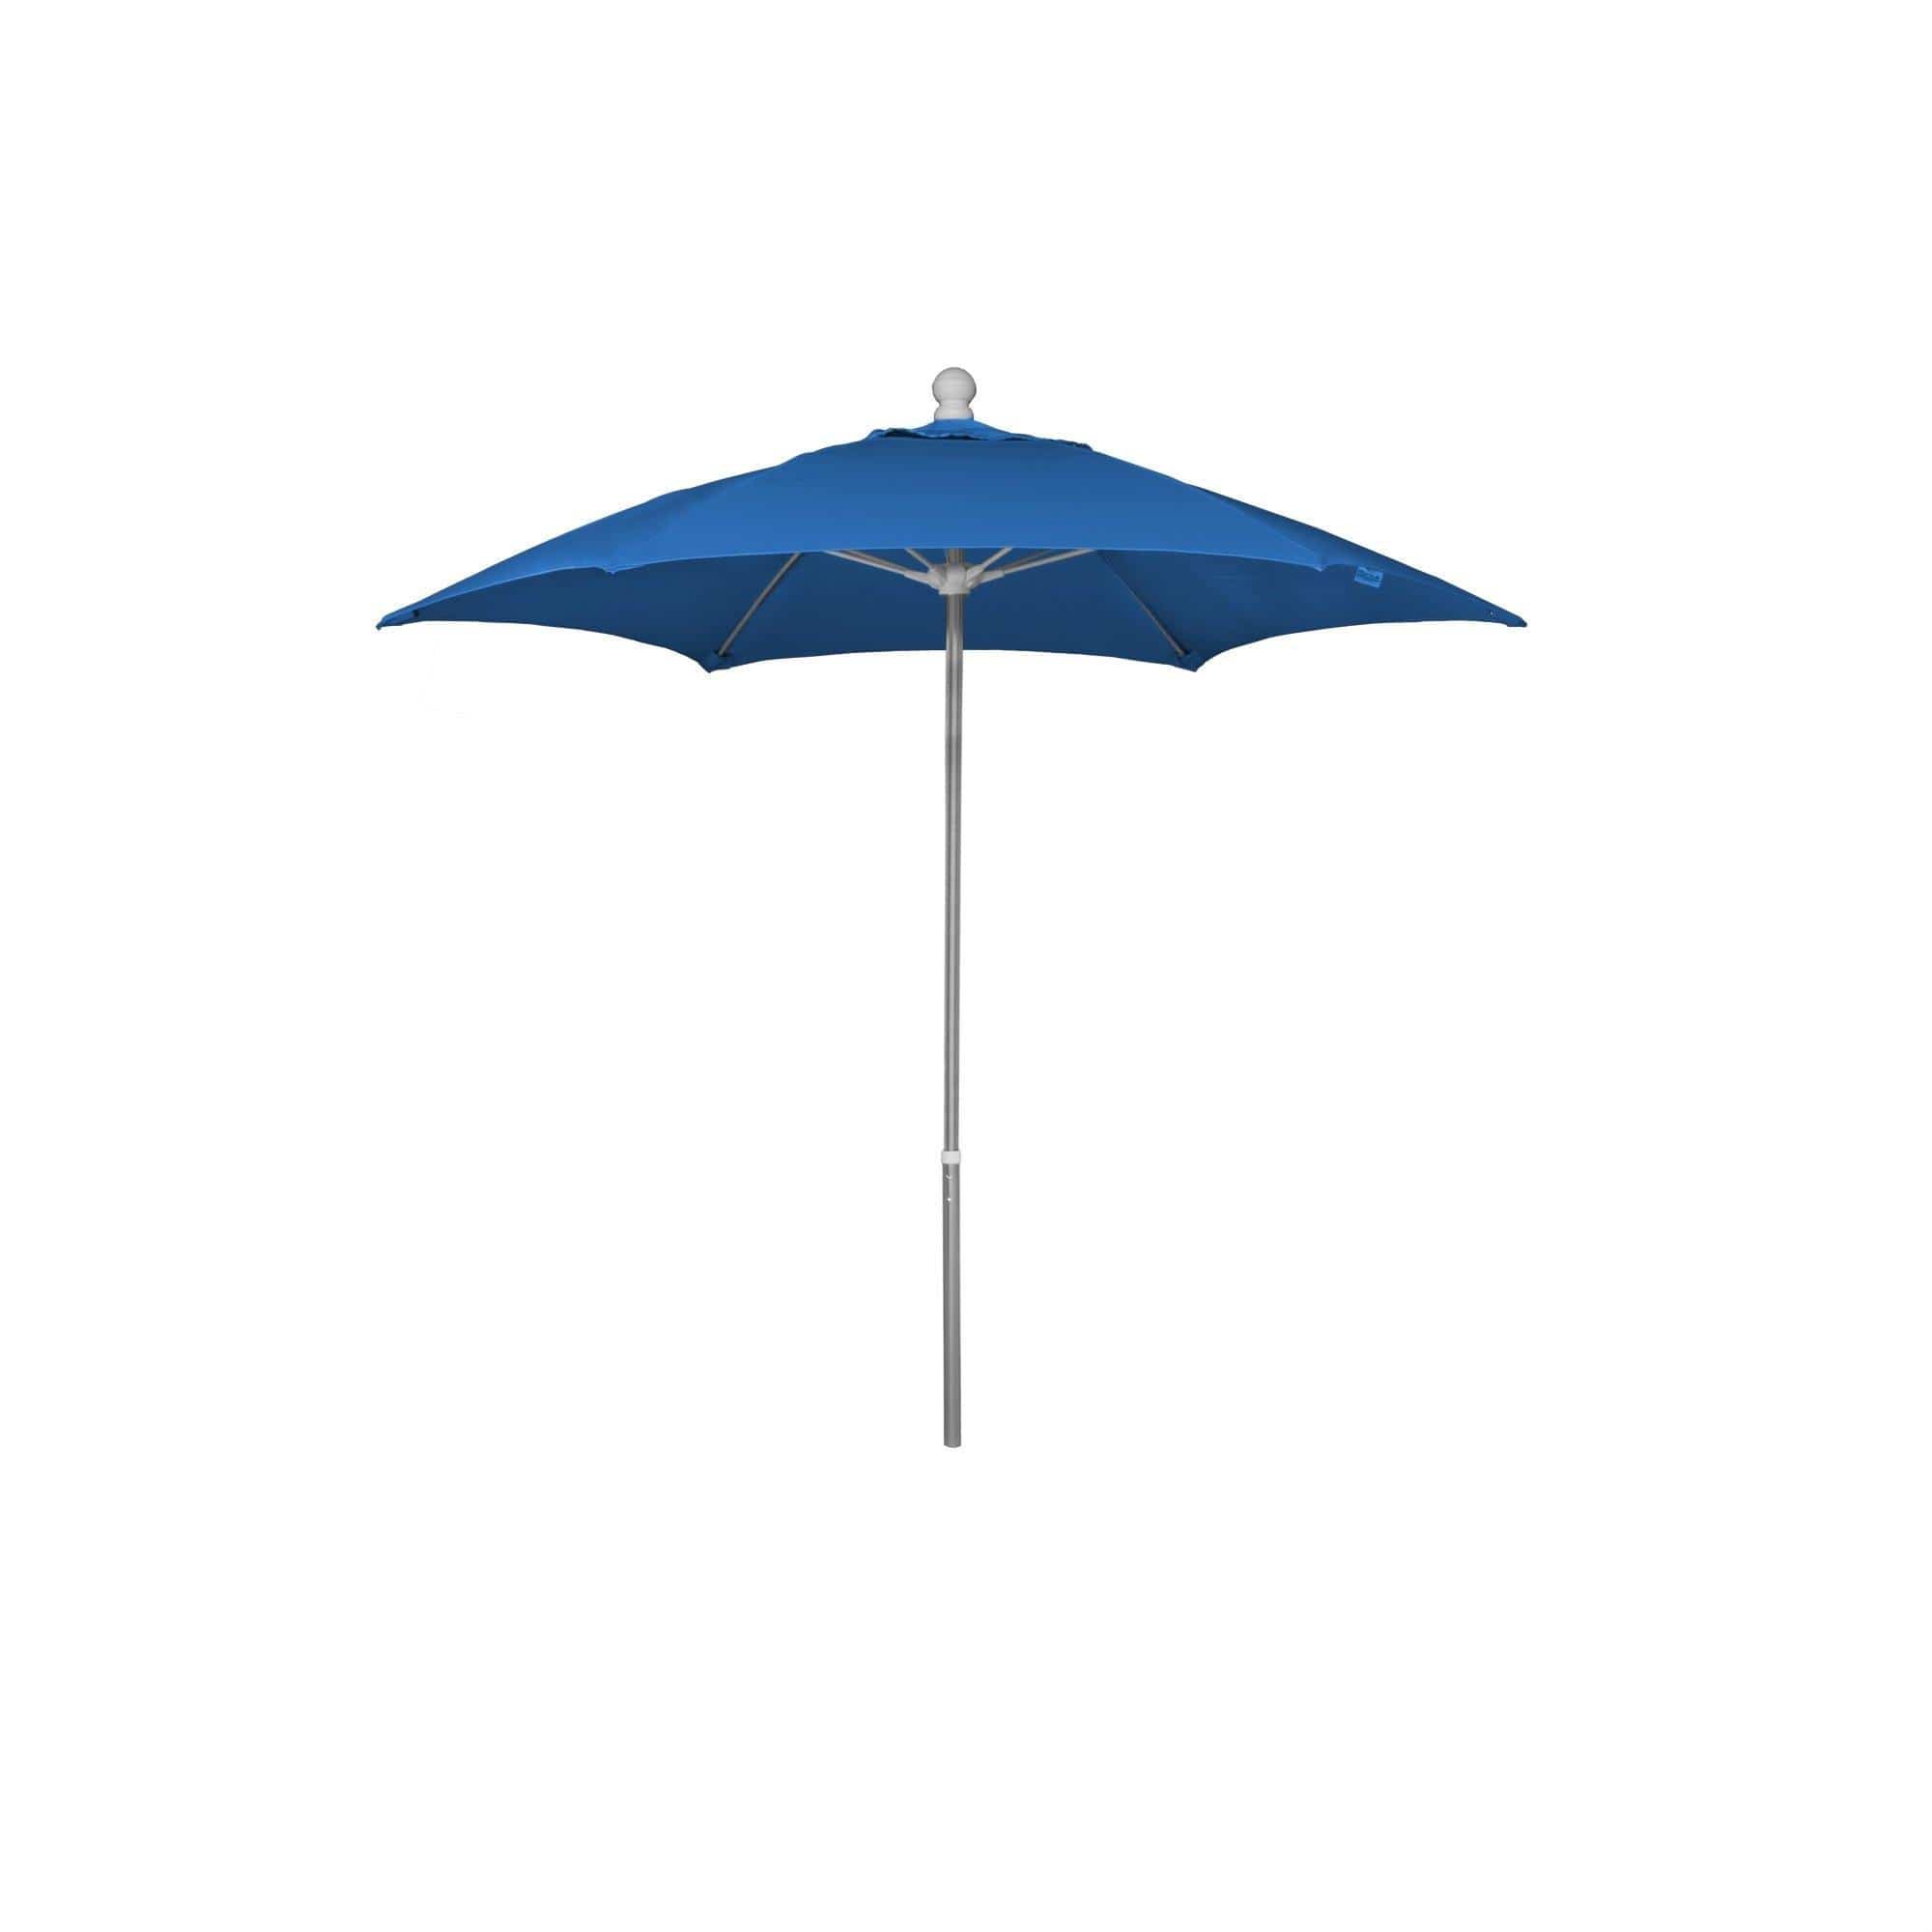 Fiberbuilt Table Umbrellas Pacific Blue 7.5' Hex Terrace Umbrella 6 Rib Push Up Bright Aluminum  Solution Dyed Acrylic Canopy